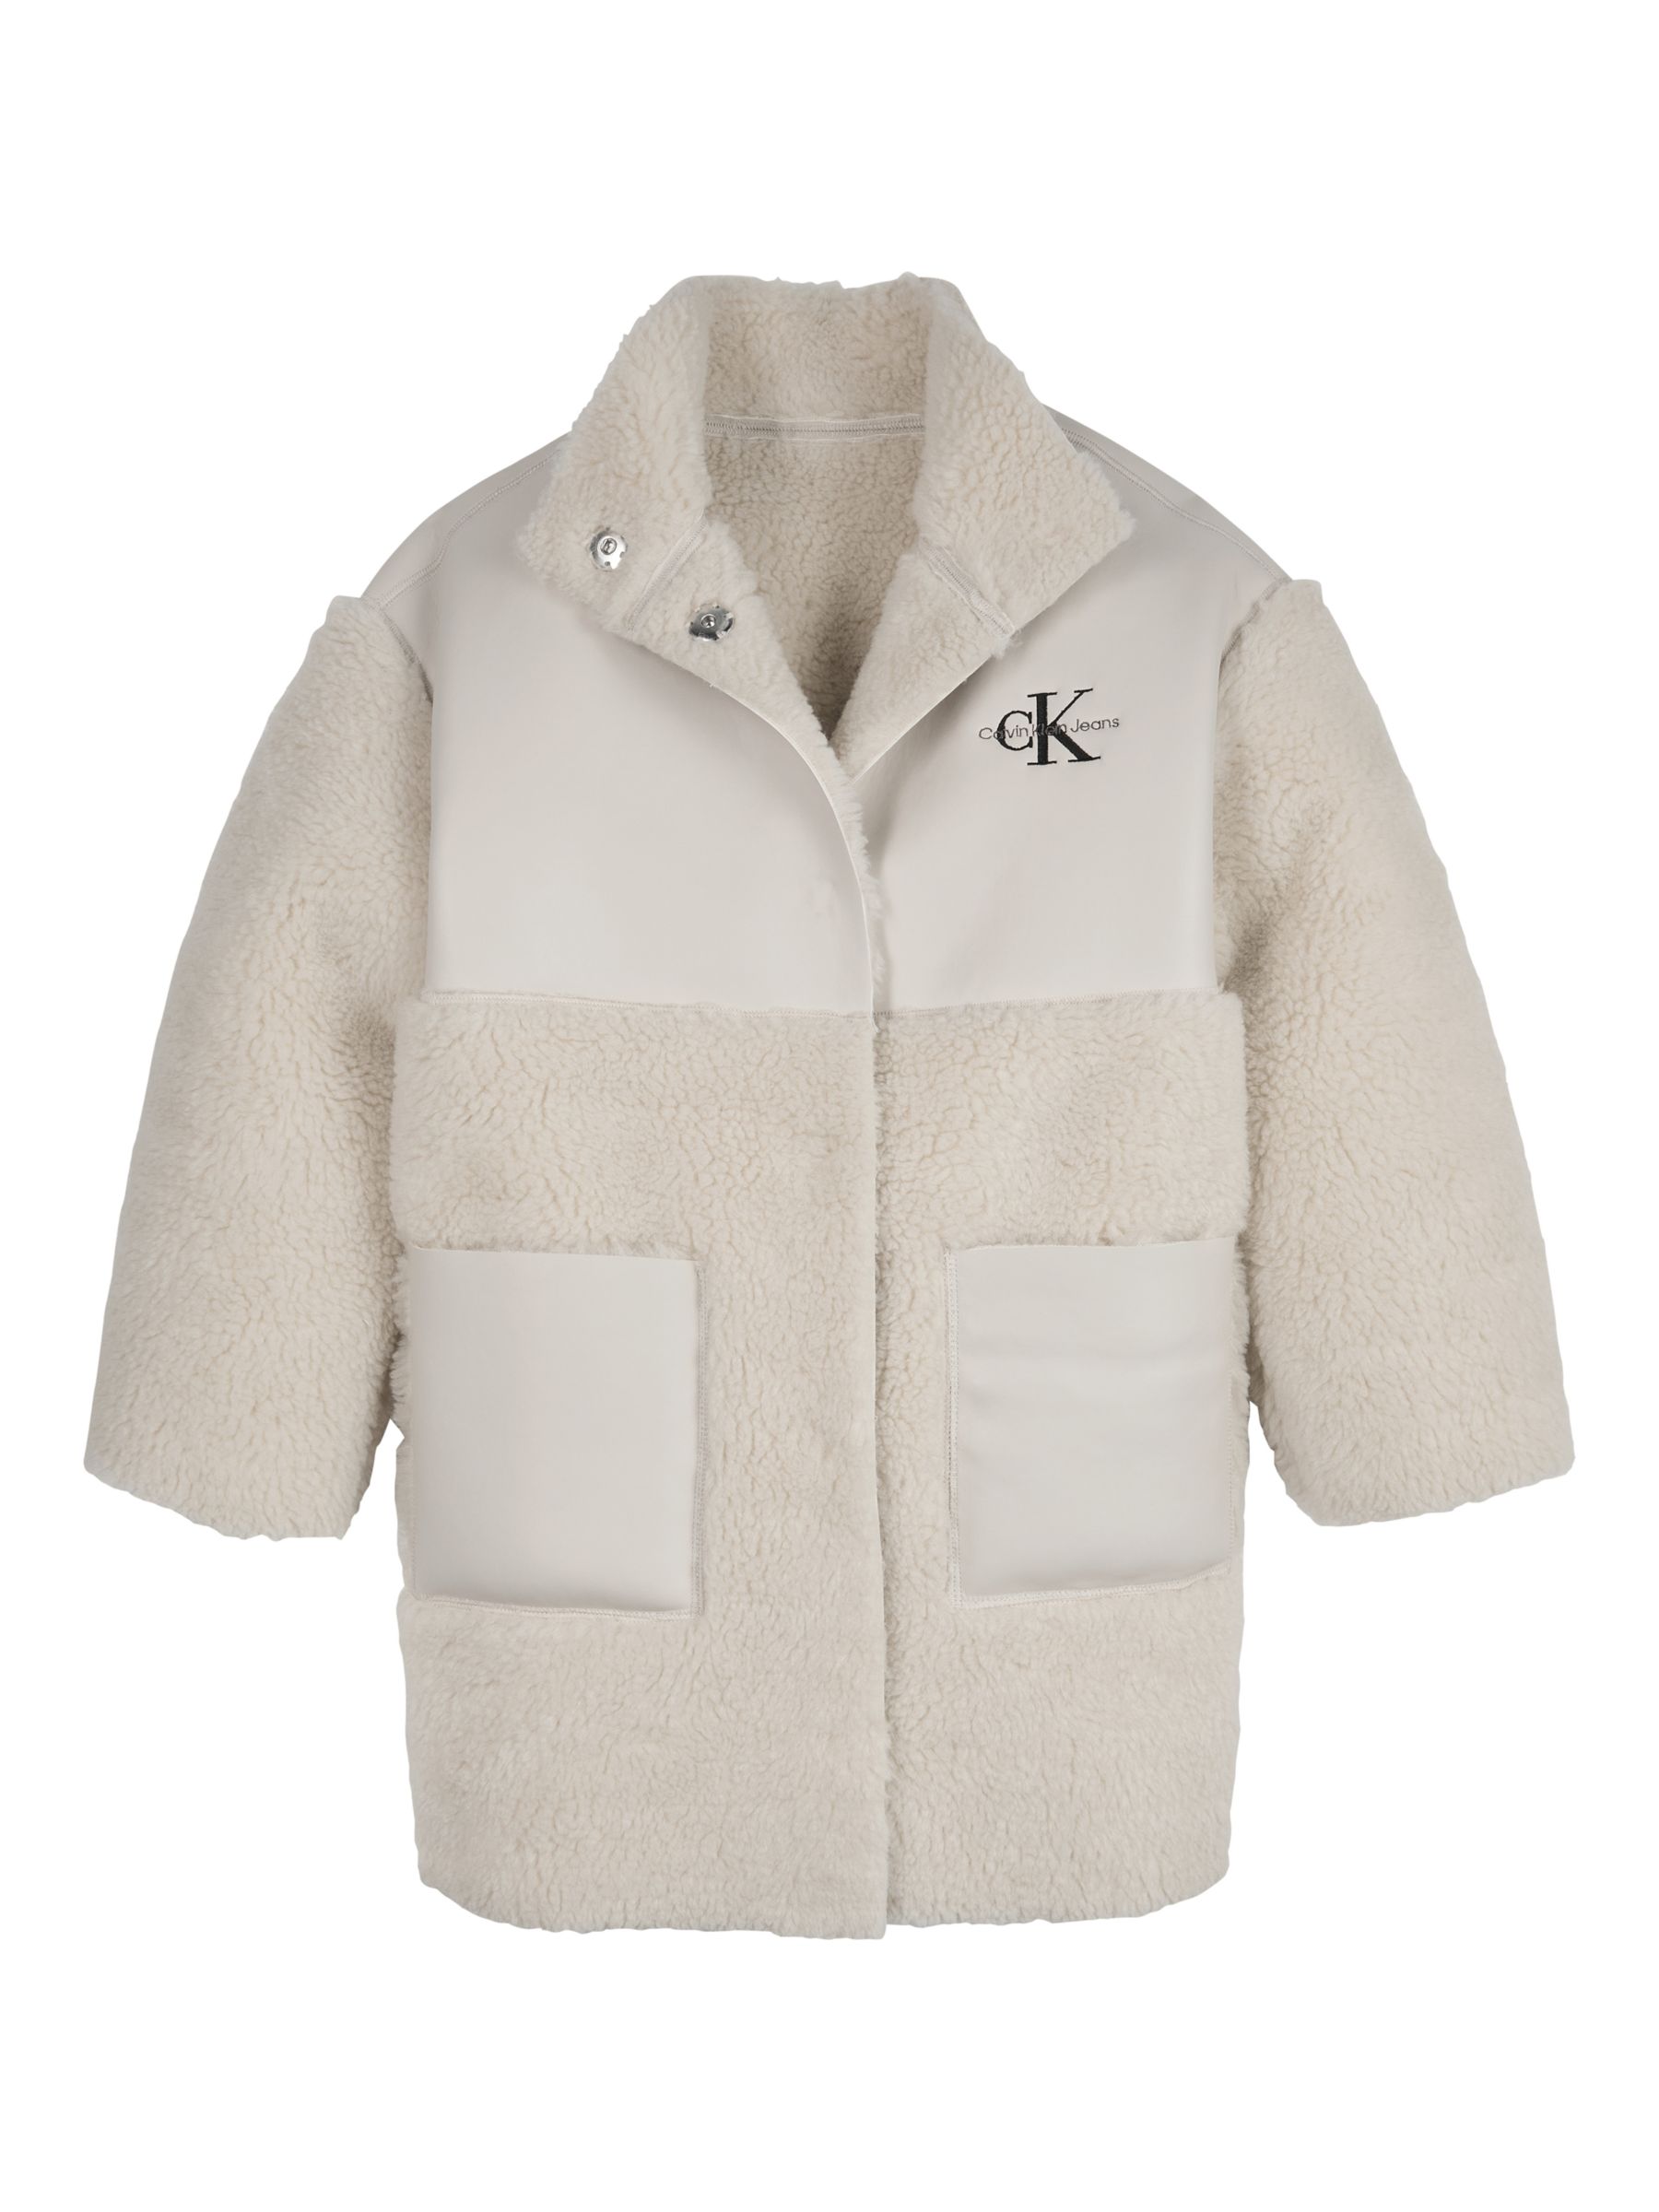 Calvin Klein Kids' Faux Fur Teddy Coat, Eggshell